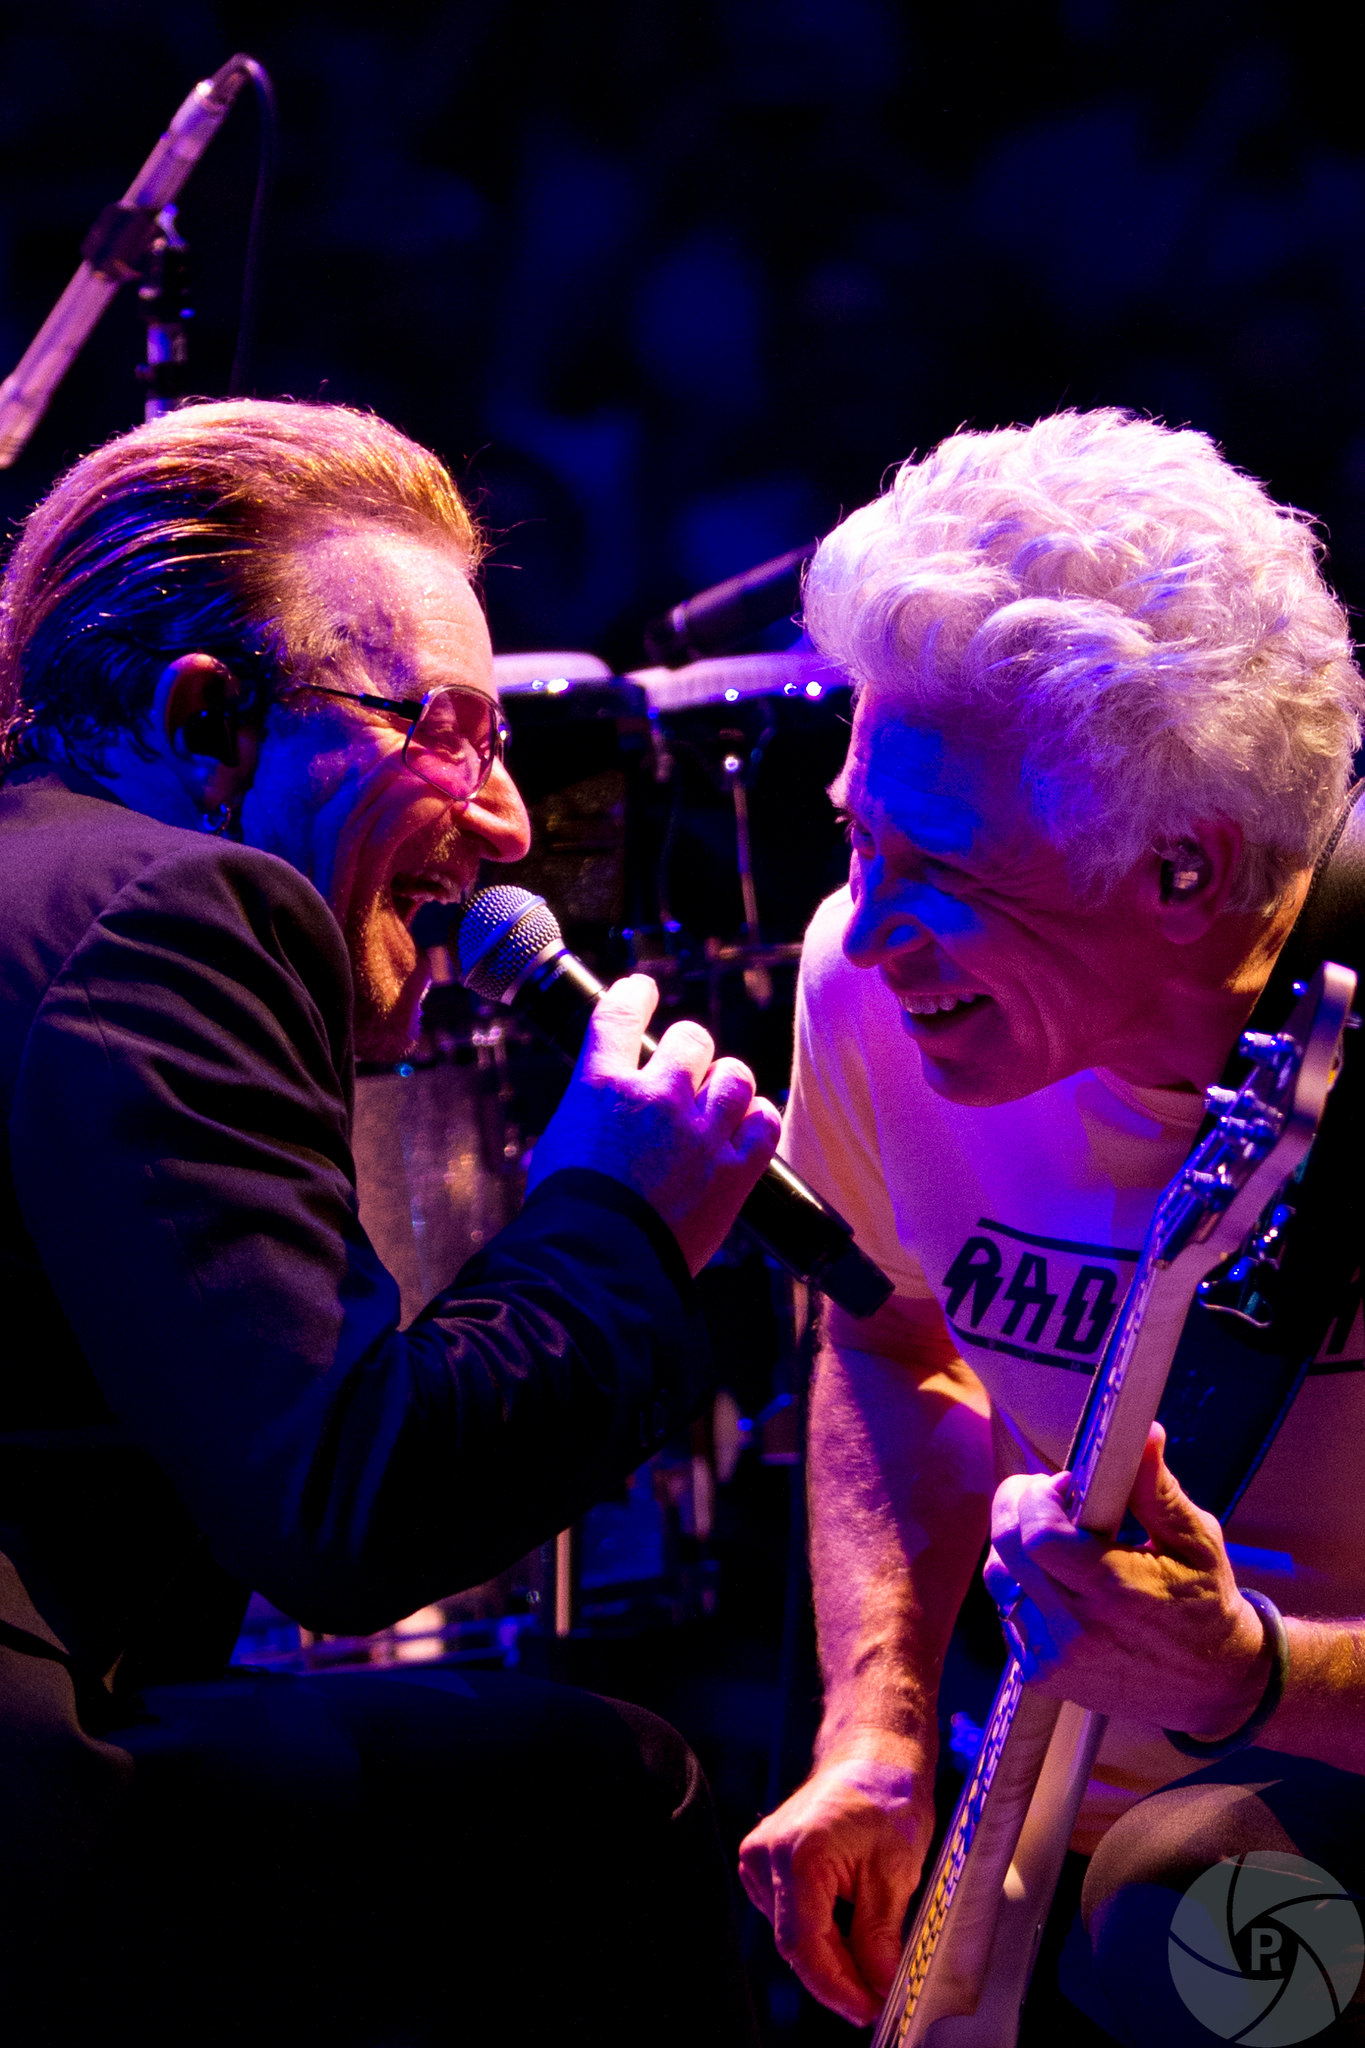 Bono and Adam laughing